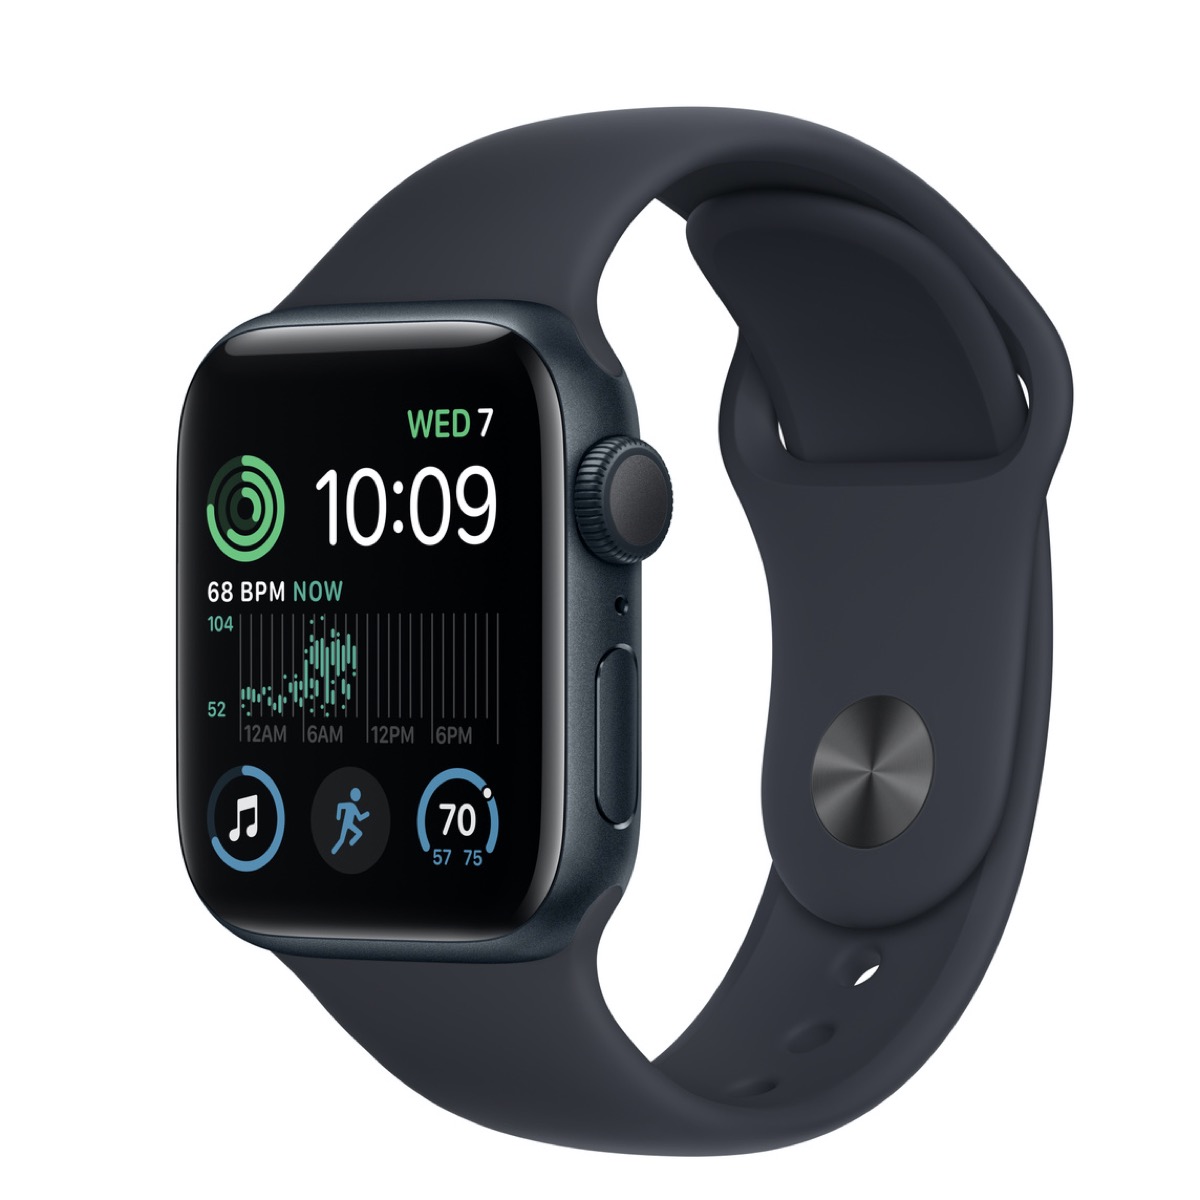 Apple Watch SE 2 refurb